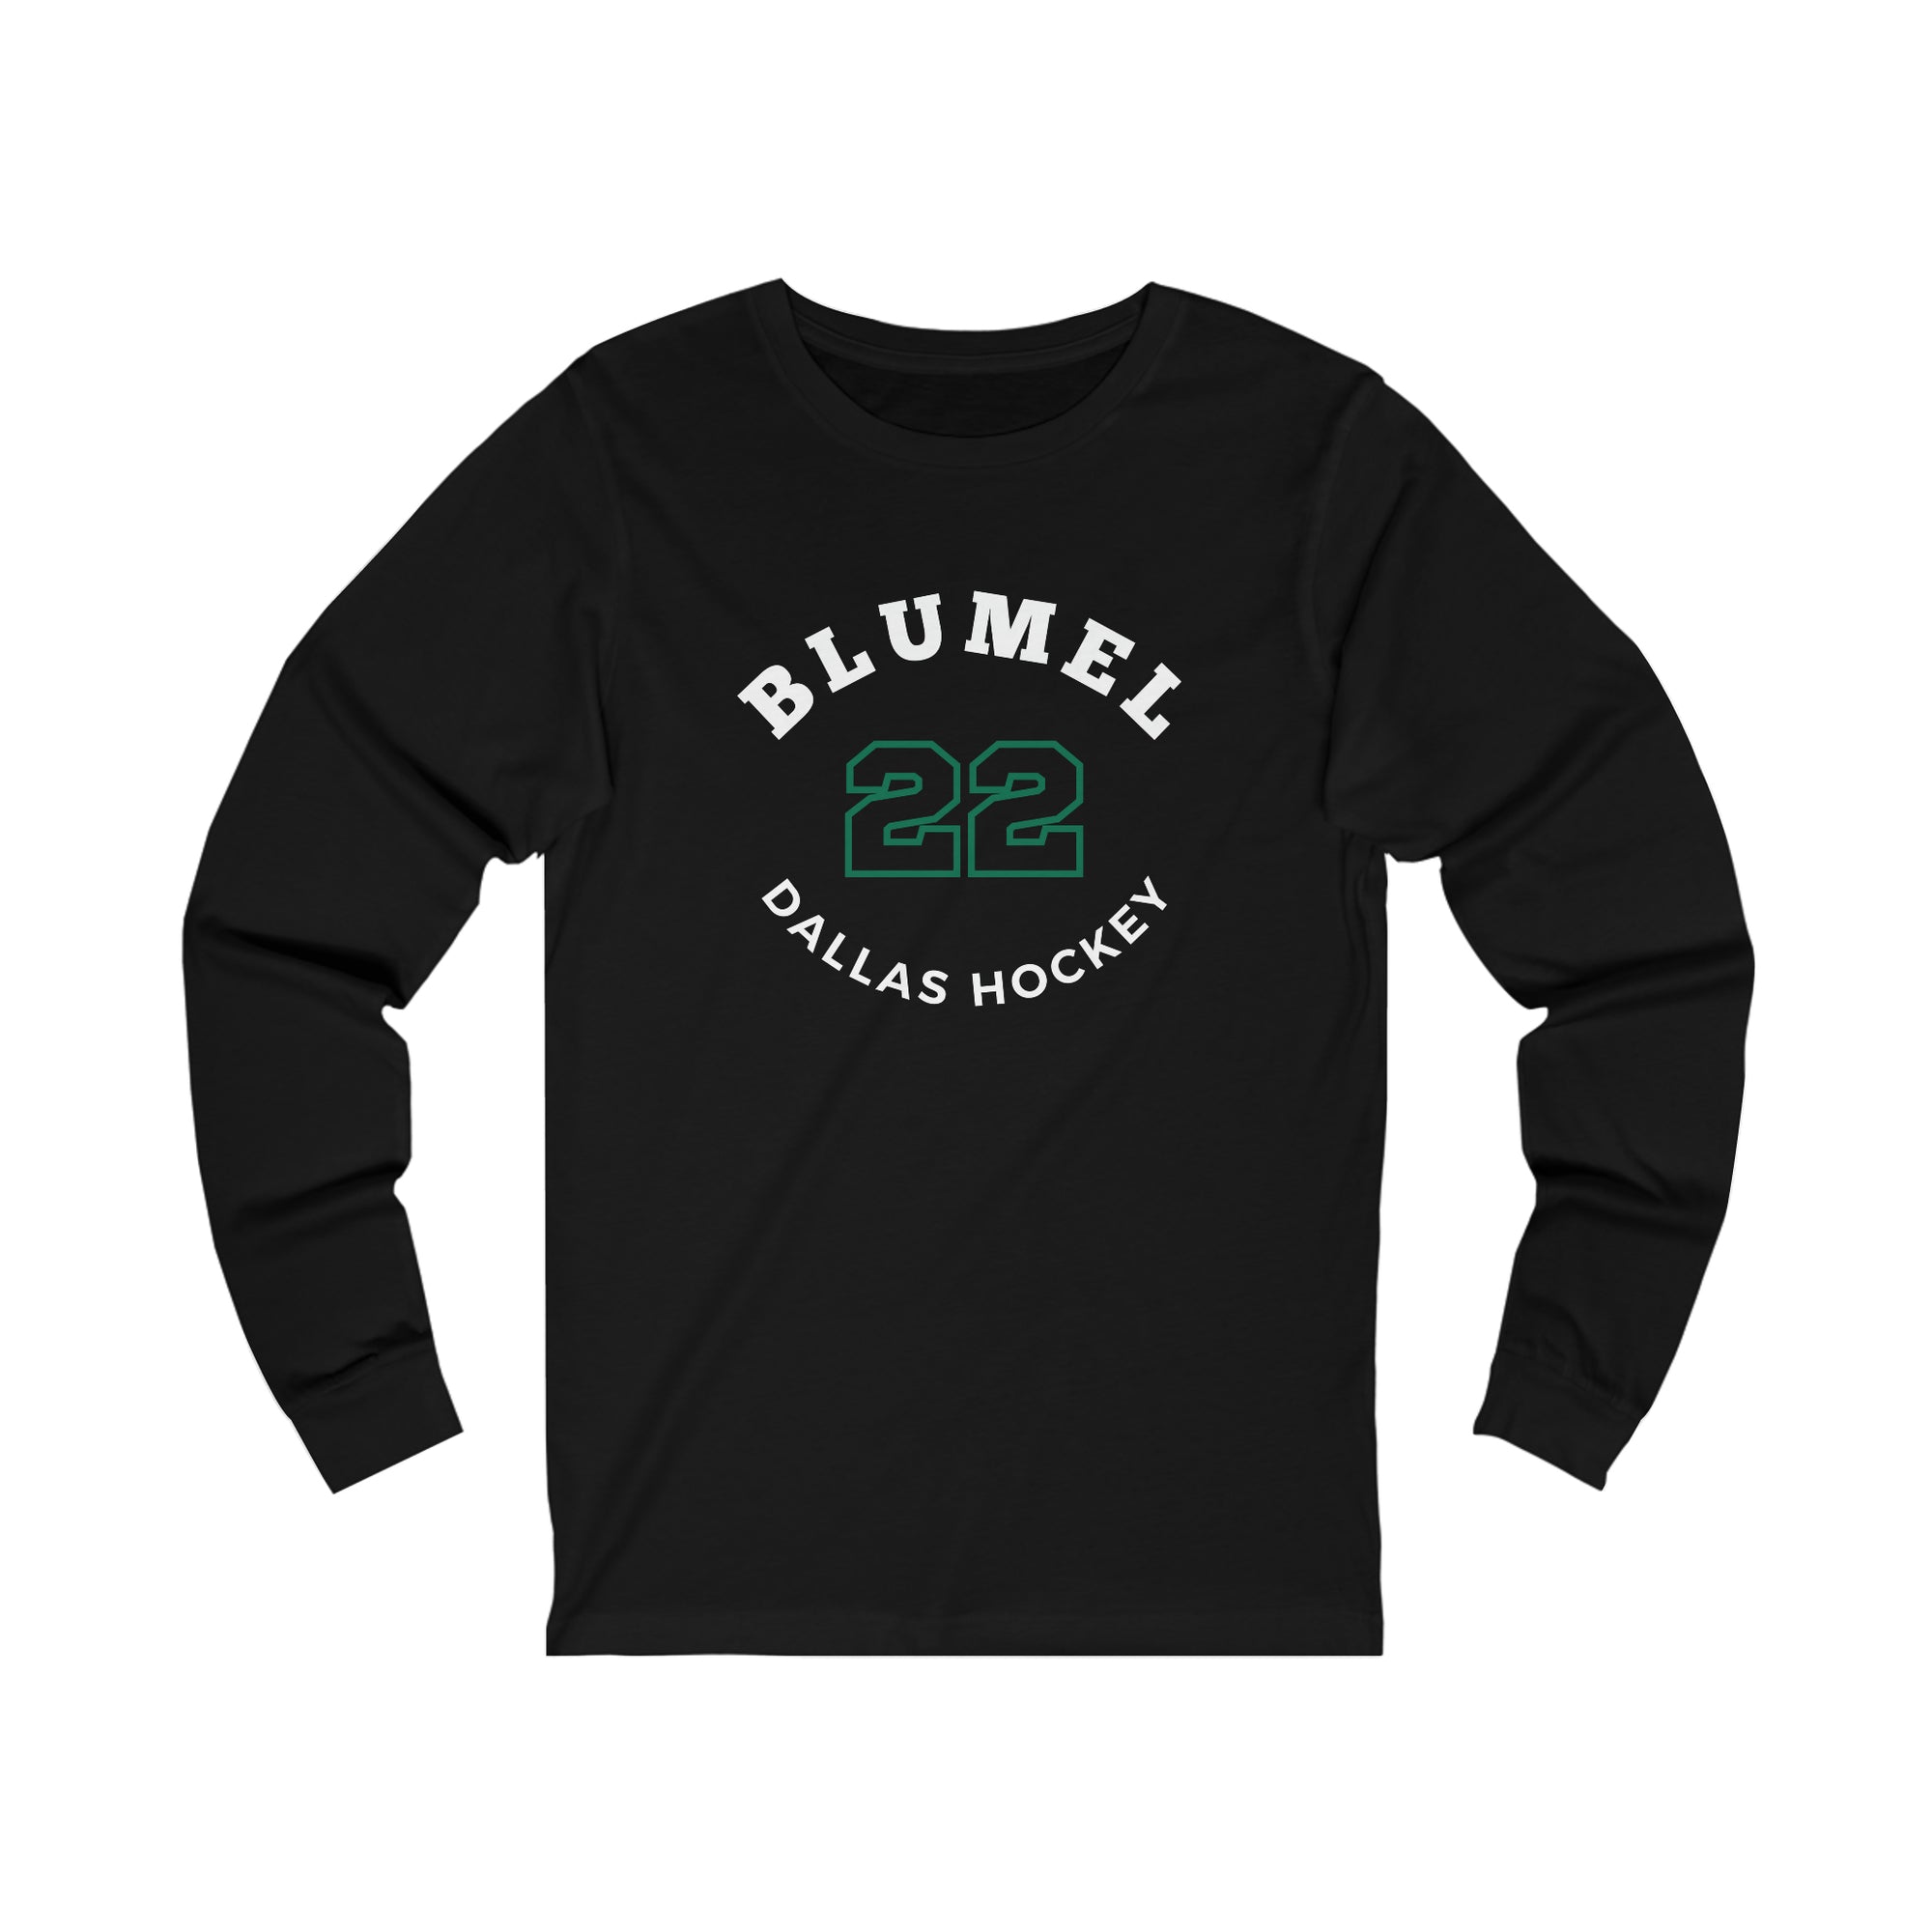 Blumel 22 Dallas Hockey Number Arch Design Unisex Jersey Long Sleeve Shirt